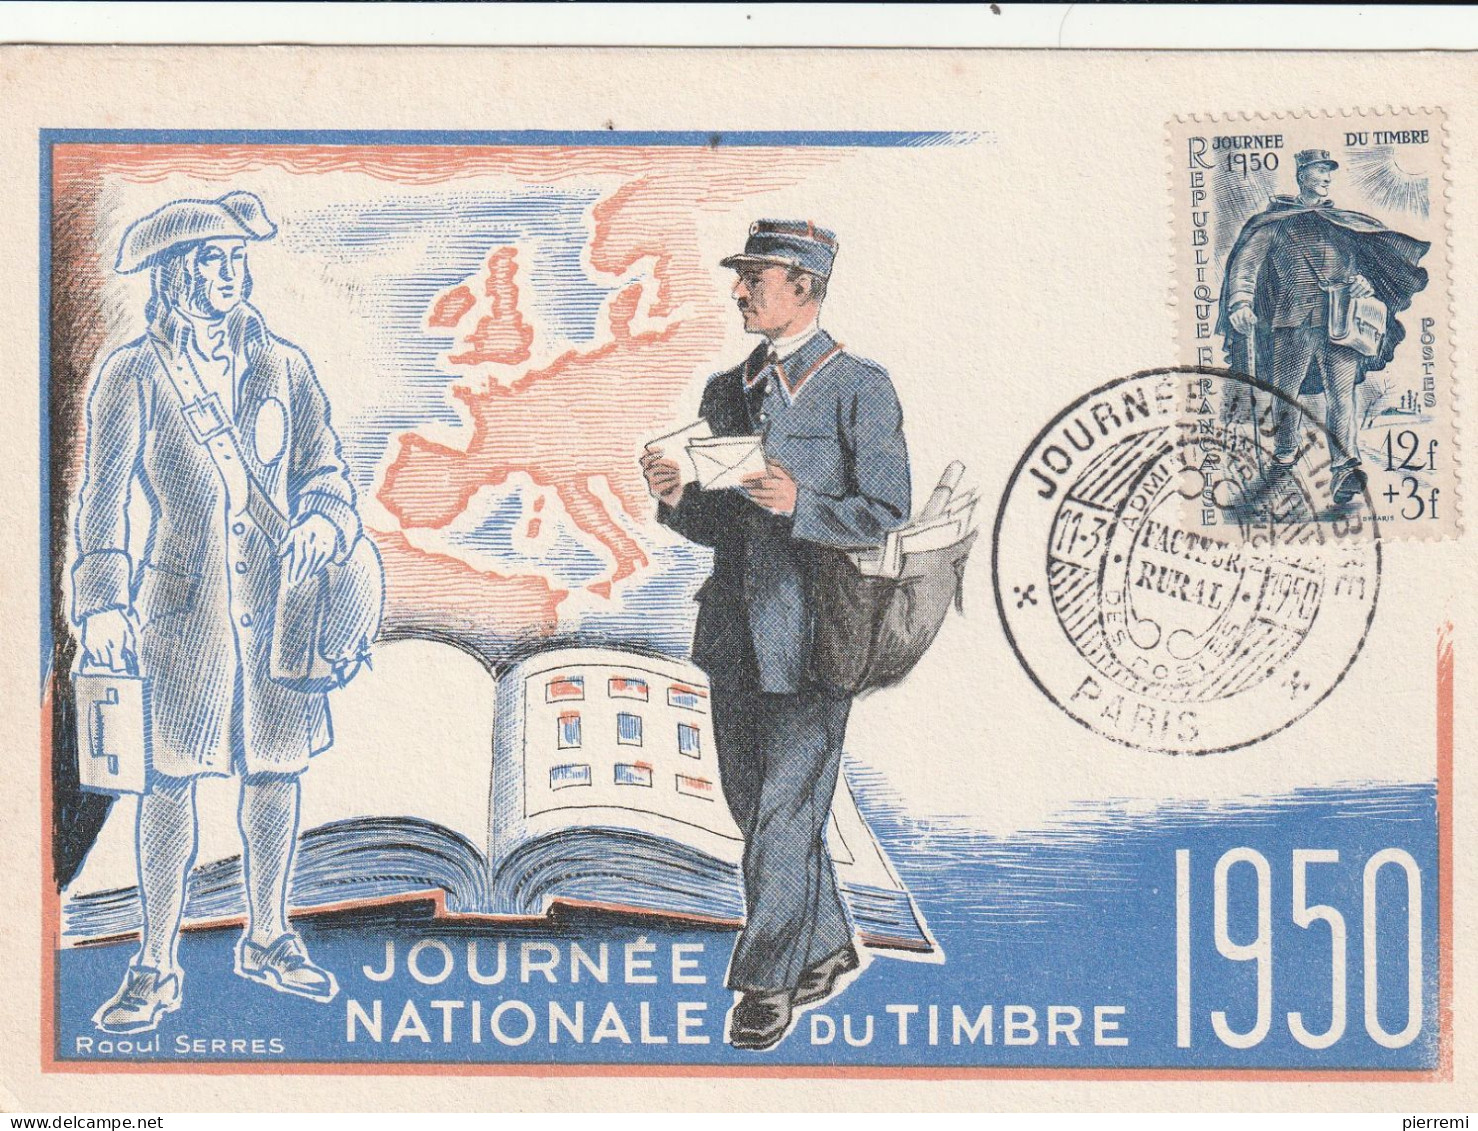 Journee Nationale Du Timbre 1950 - Post